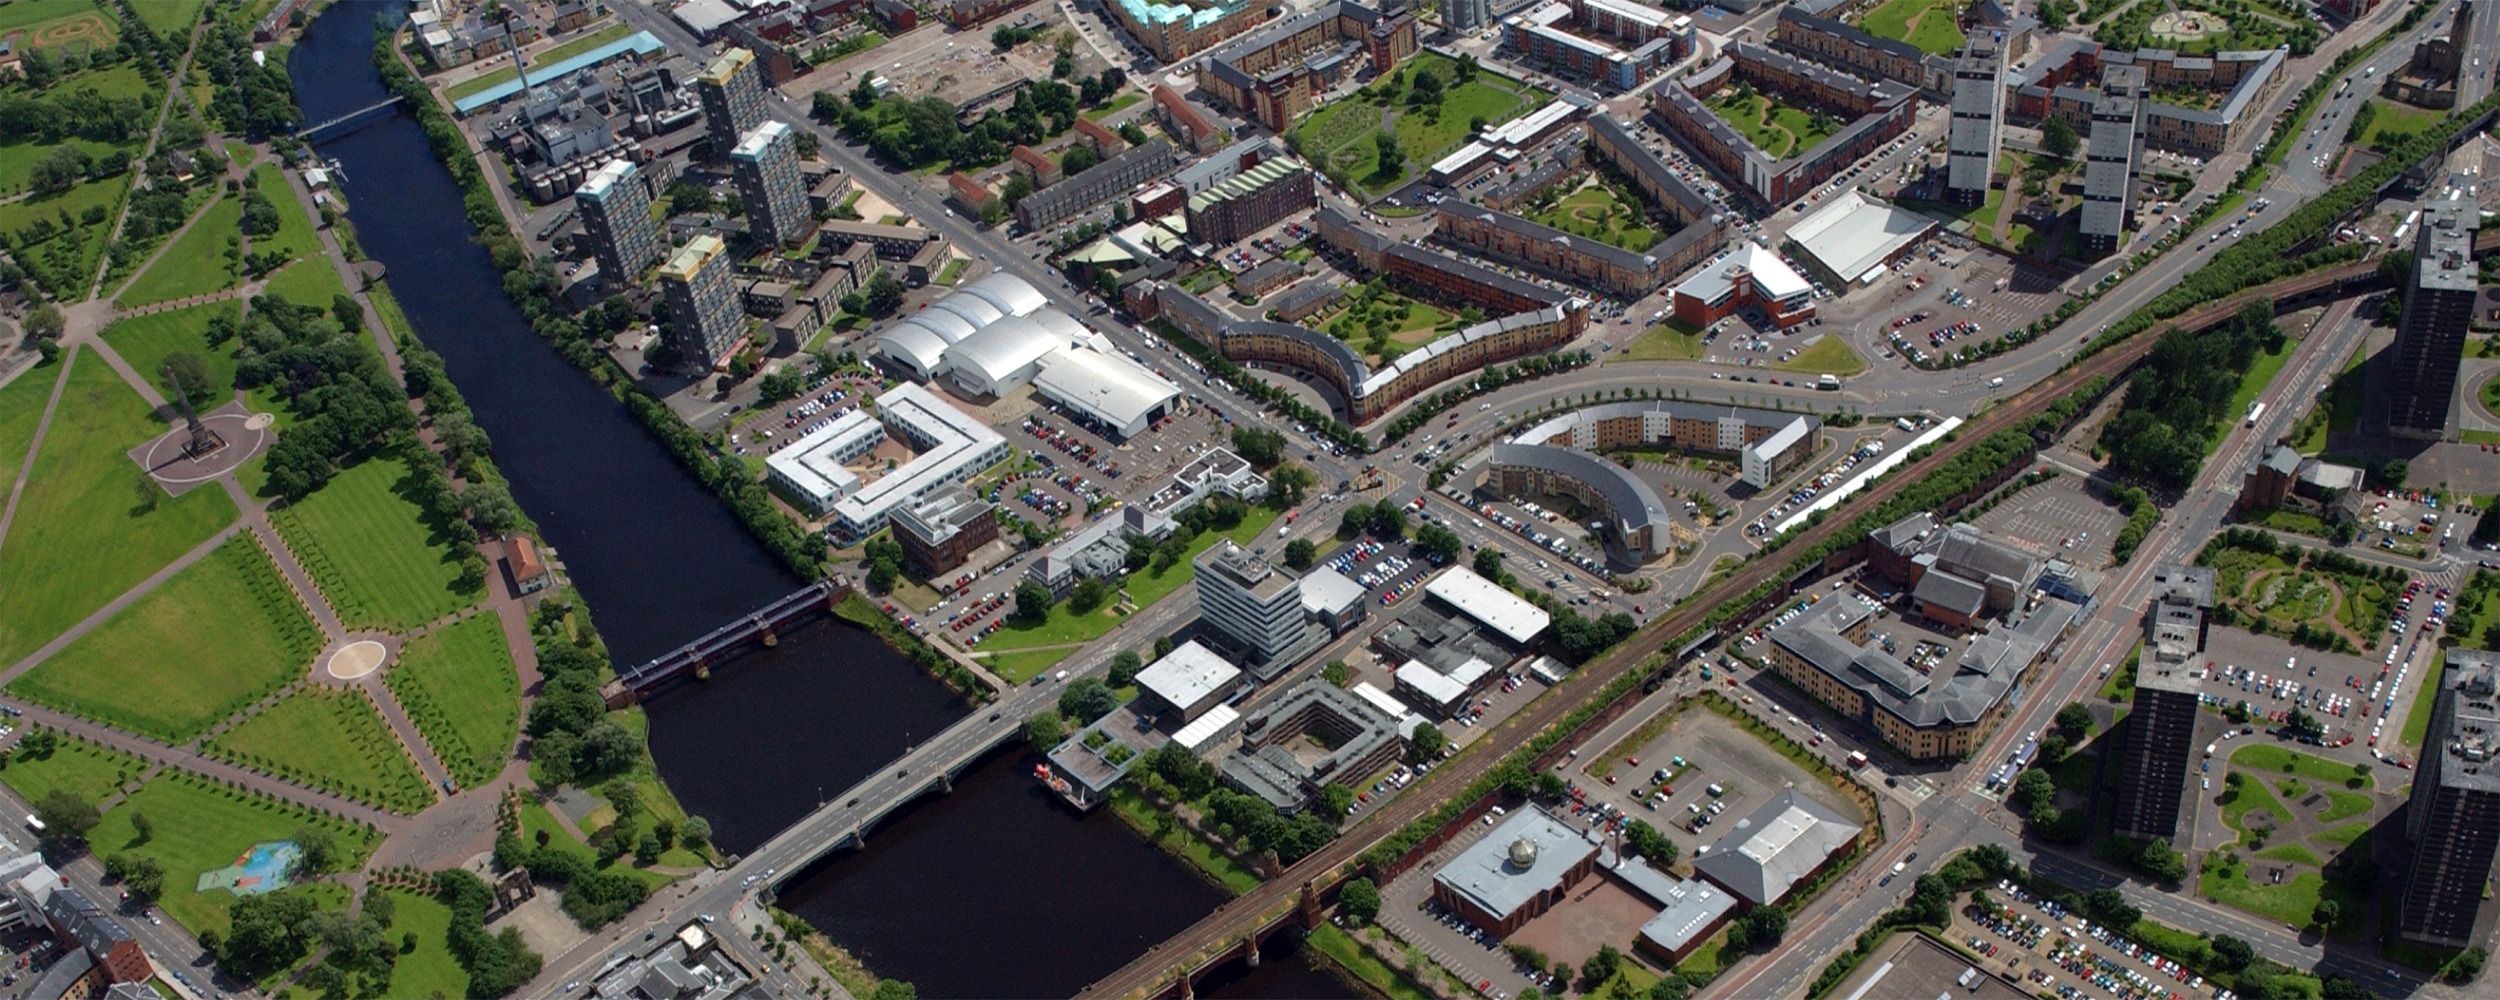 Glasgow Clyde aerial scene